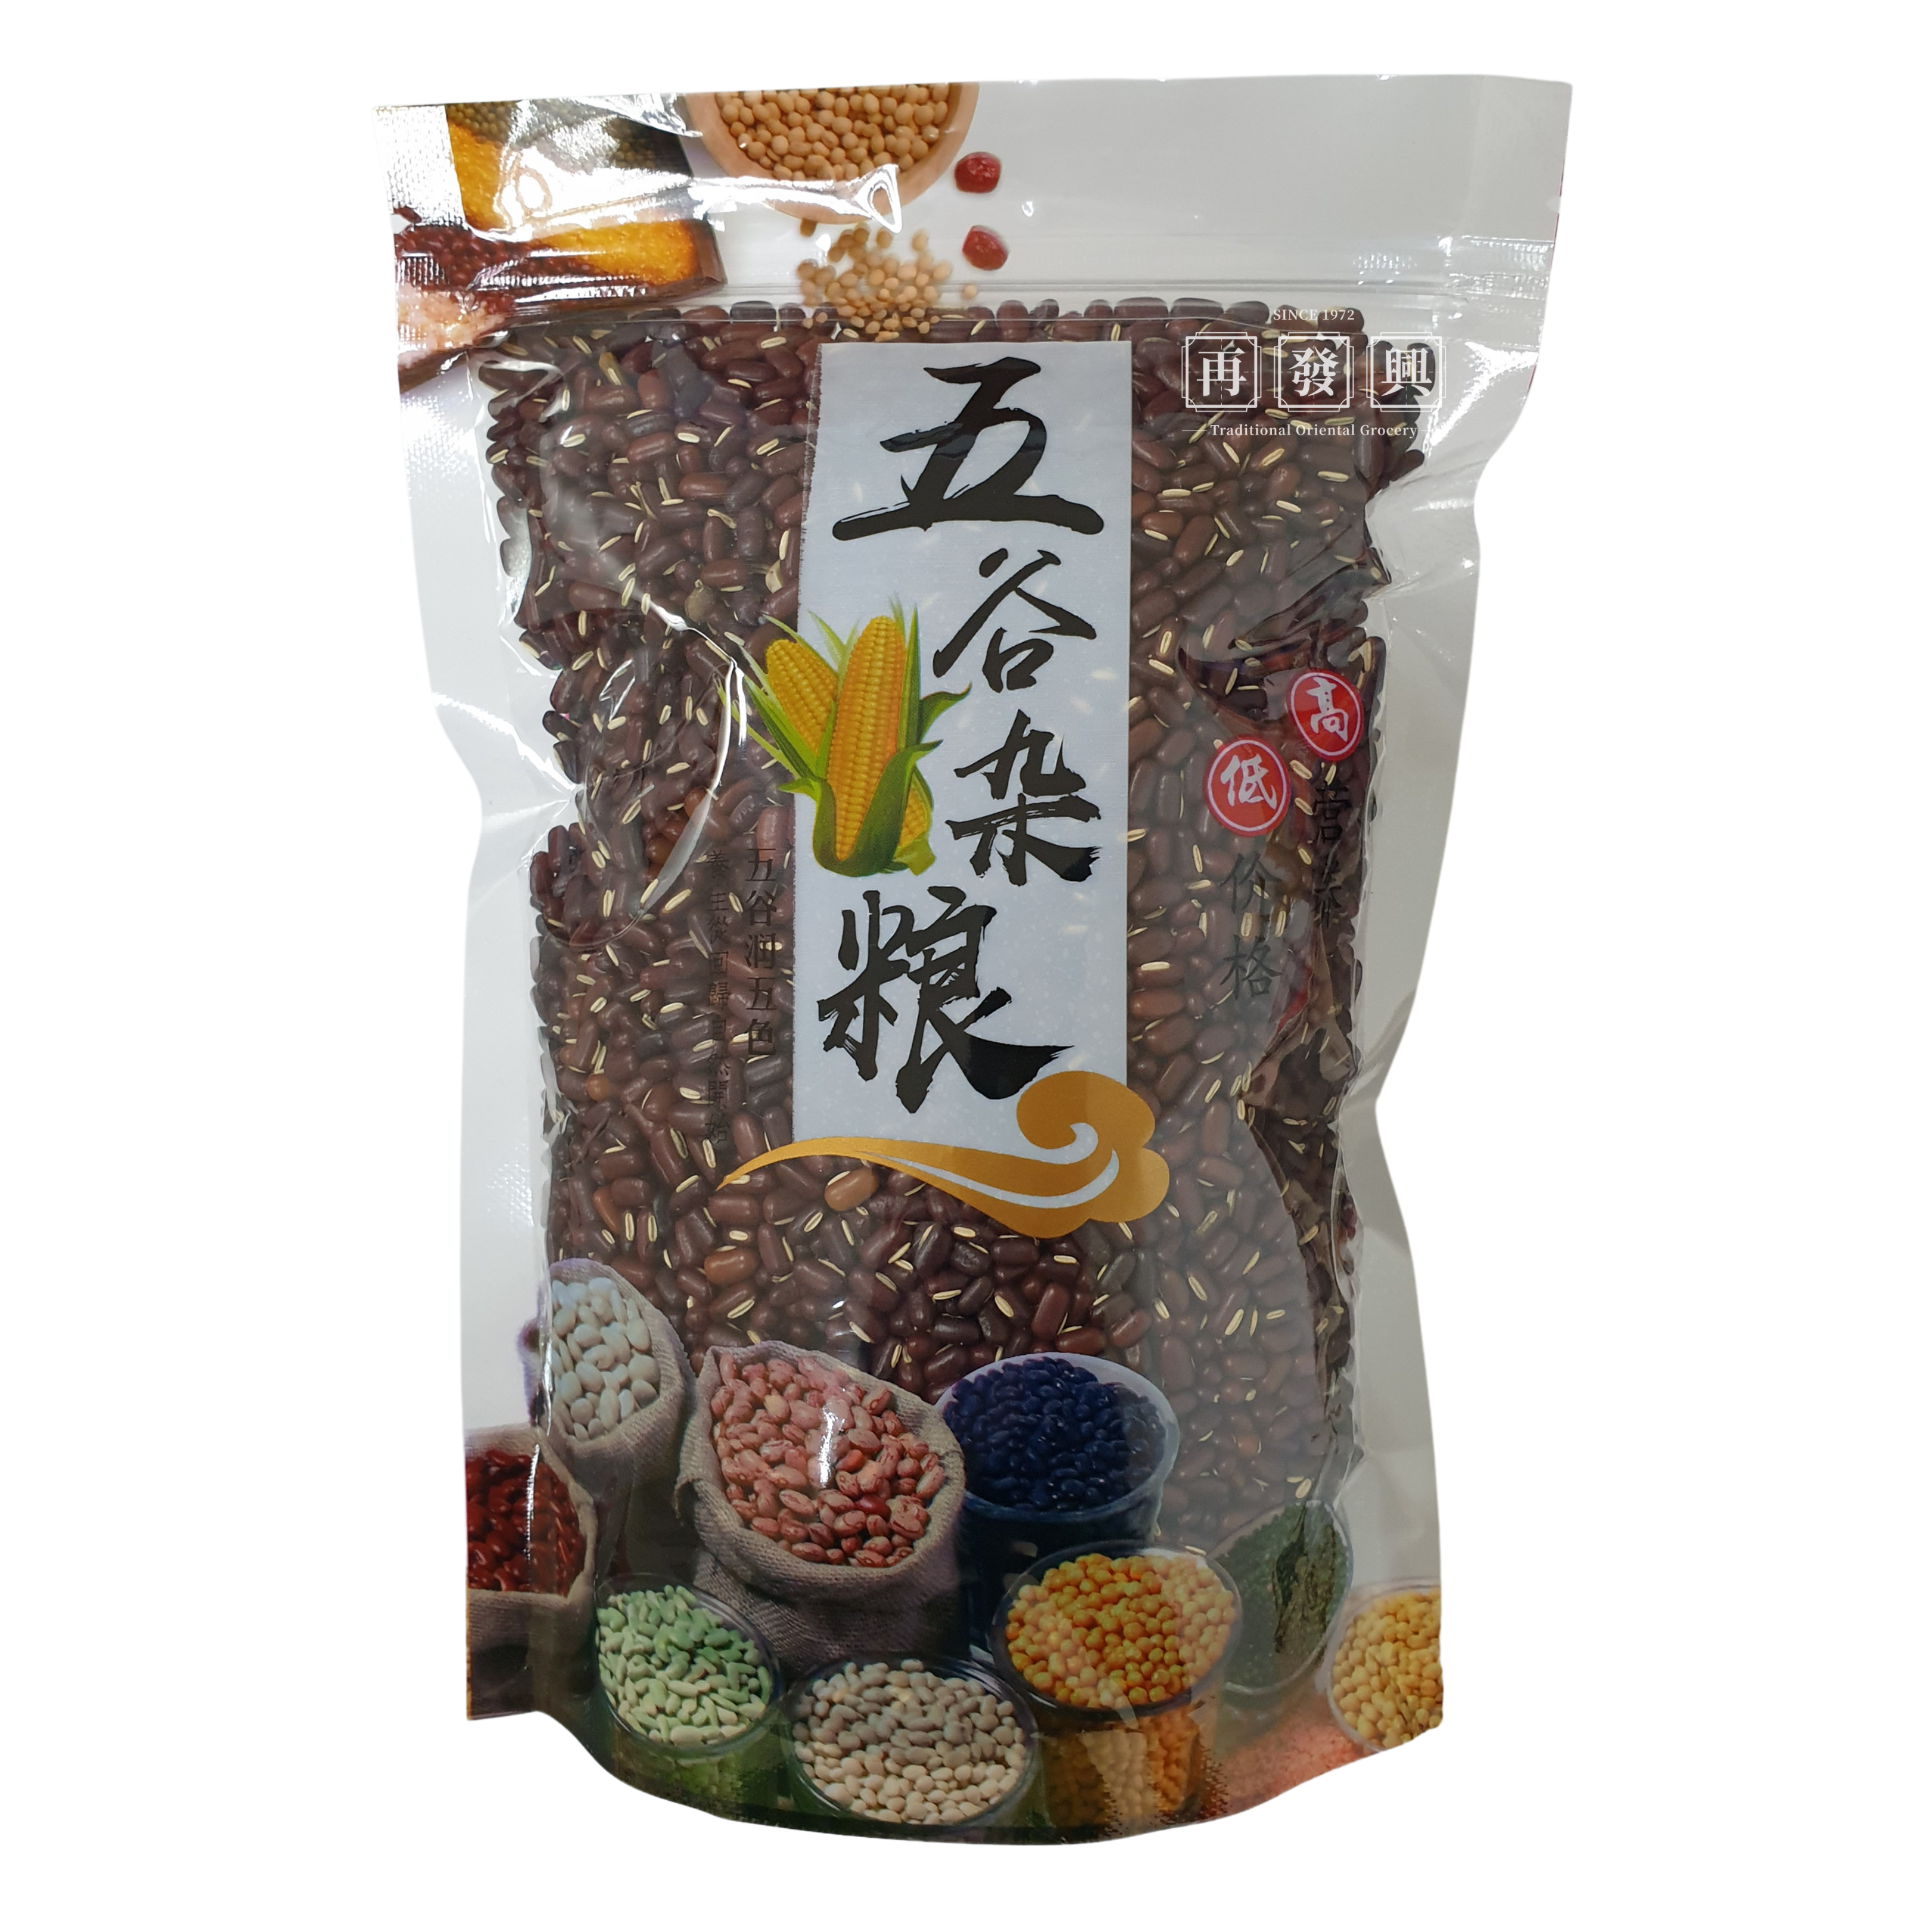 Coarse Grains Series Bean Pack: Red Rice Bean 五谷杂粮類(赤小豆) 500g